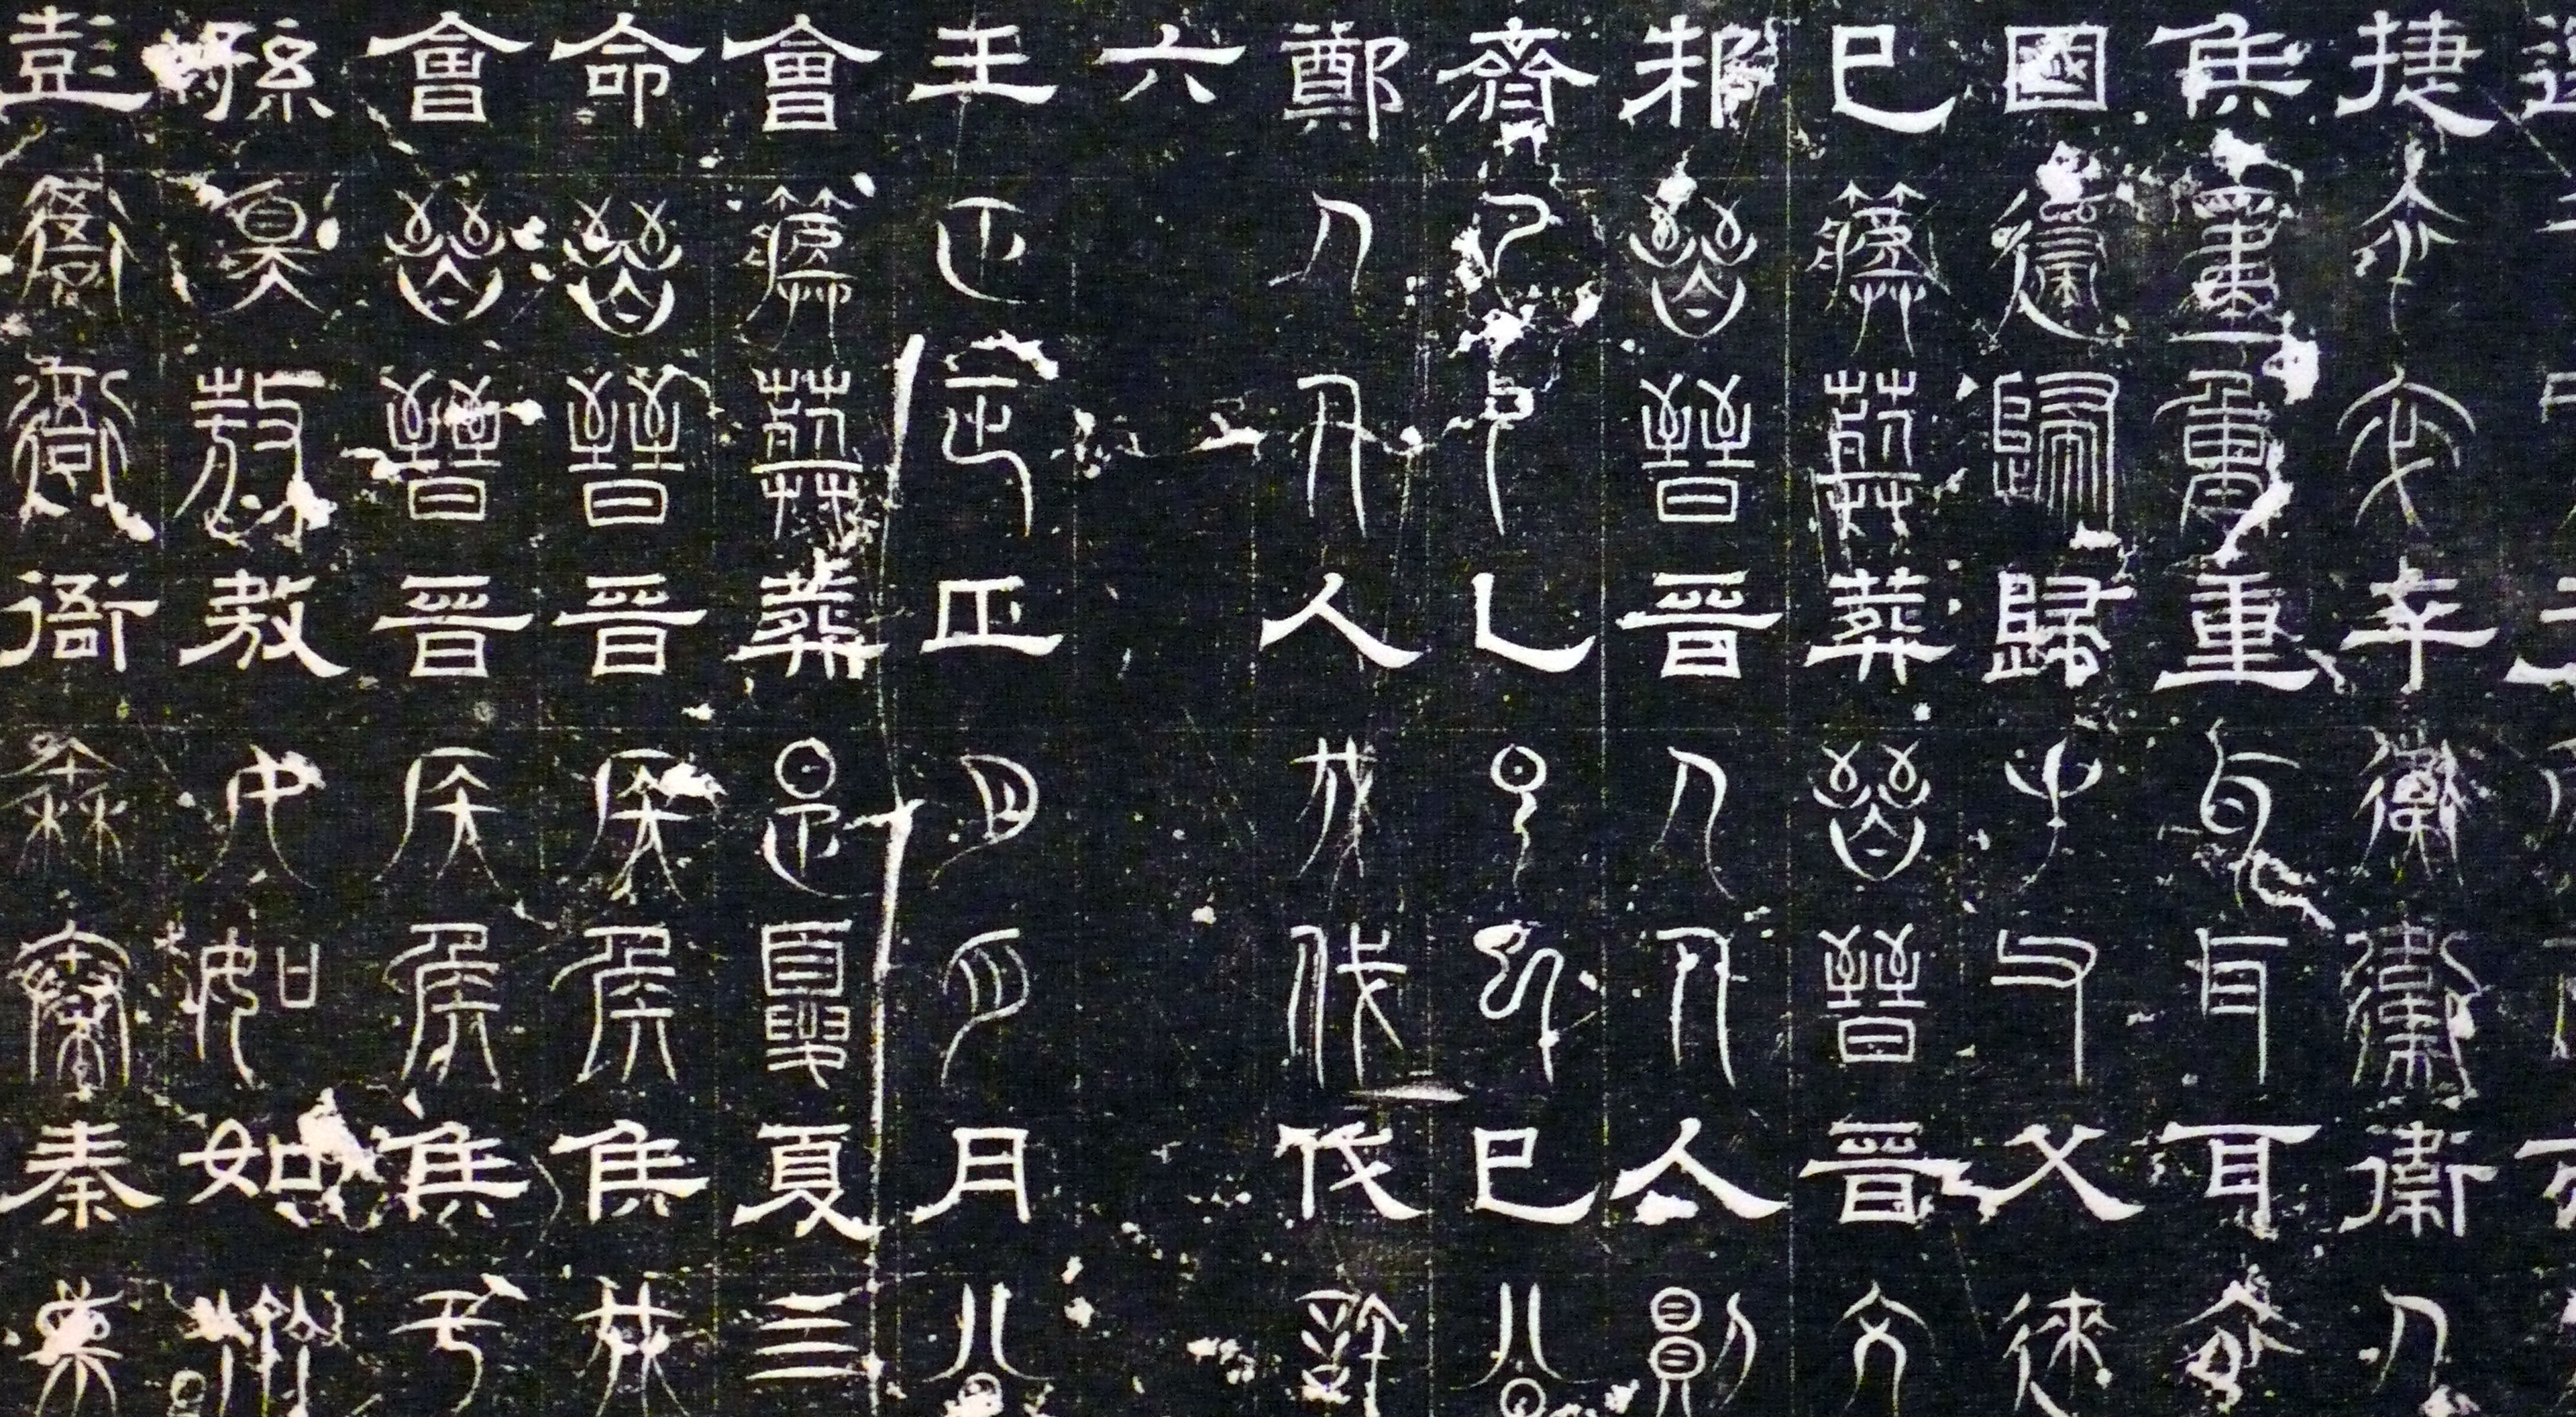 File:三体石经拓片.JPG - Wikimedia Commons